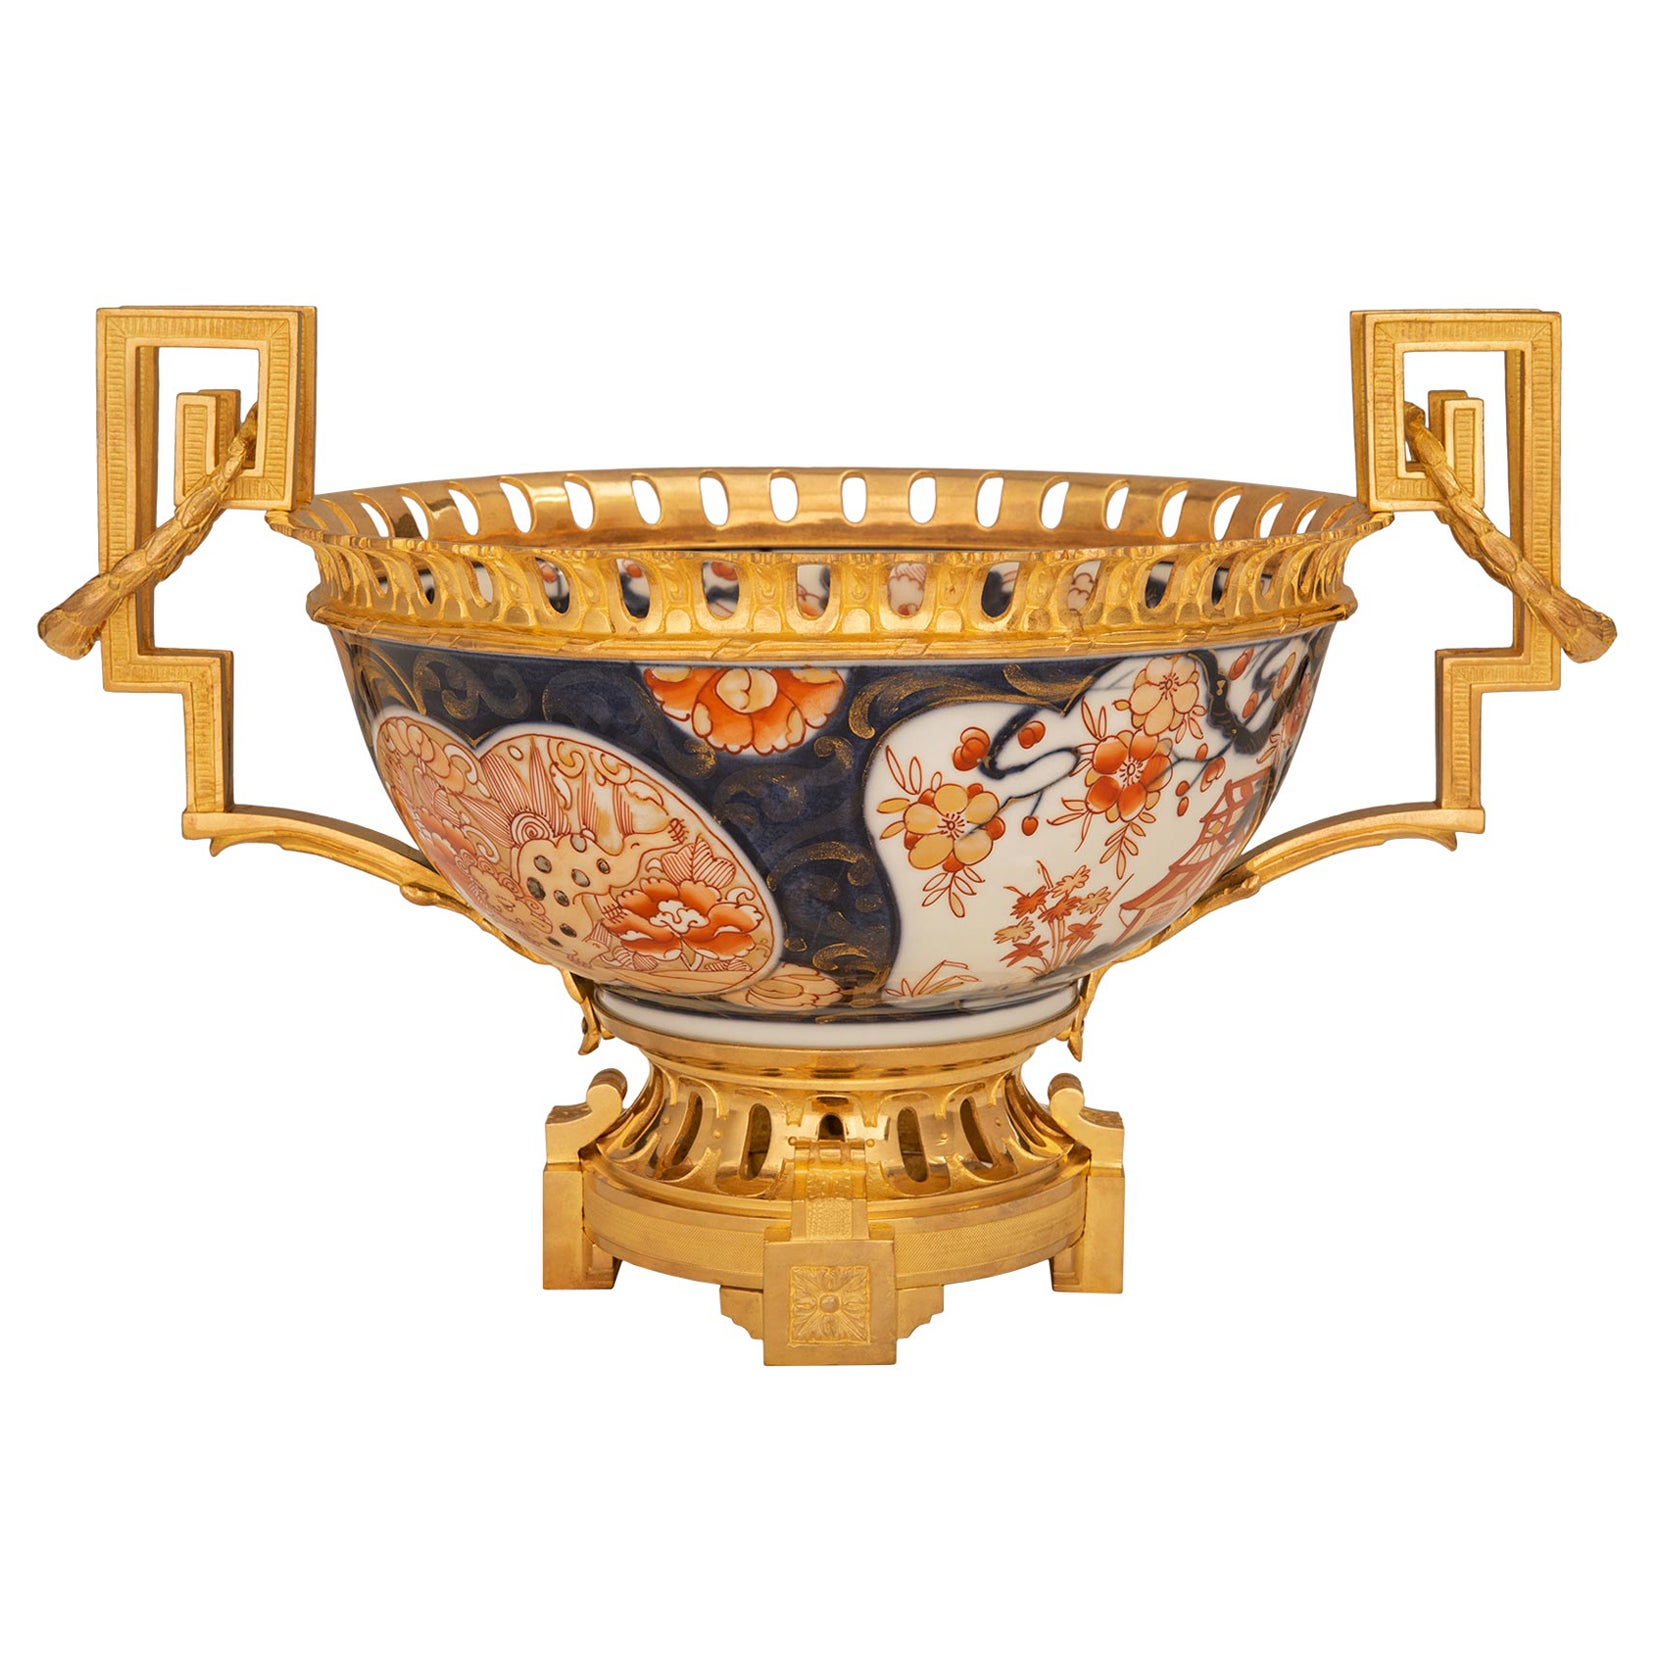 Japanese 19th Century Imari Porcelain And Ormolu Centerpiece For Sale